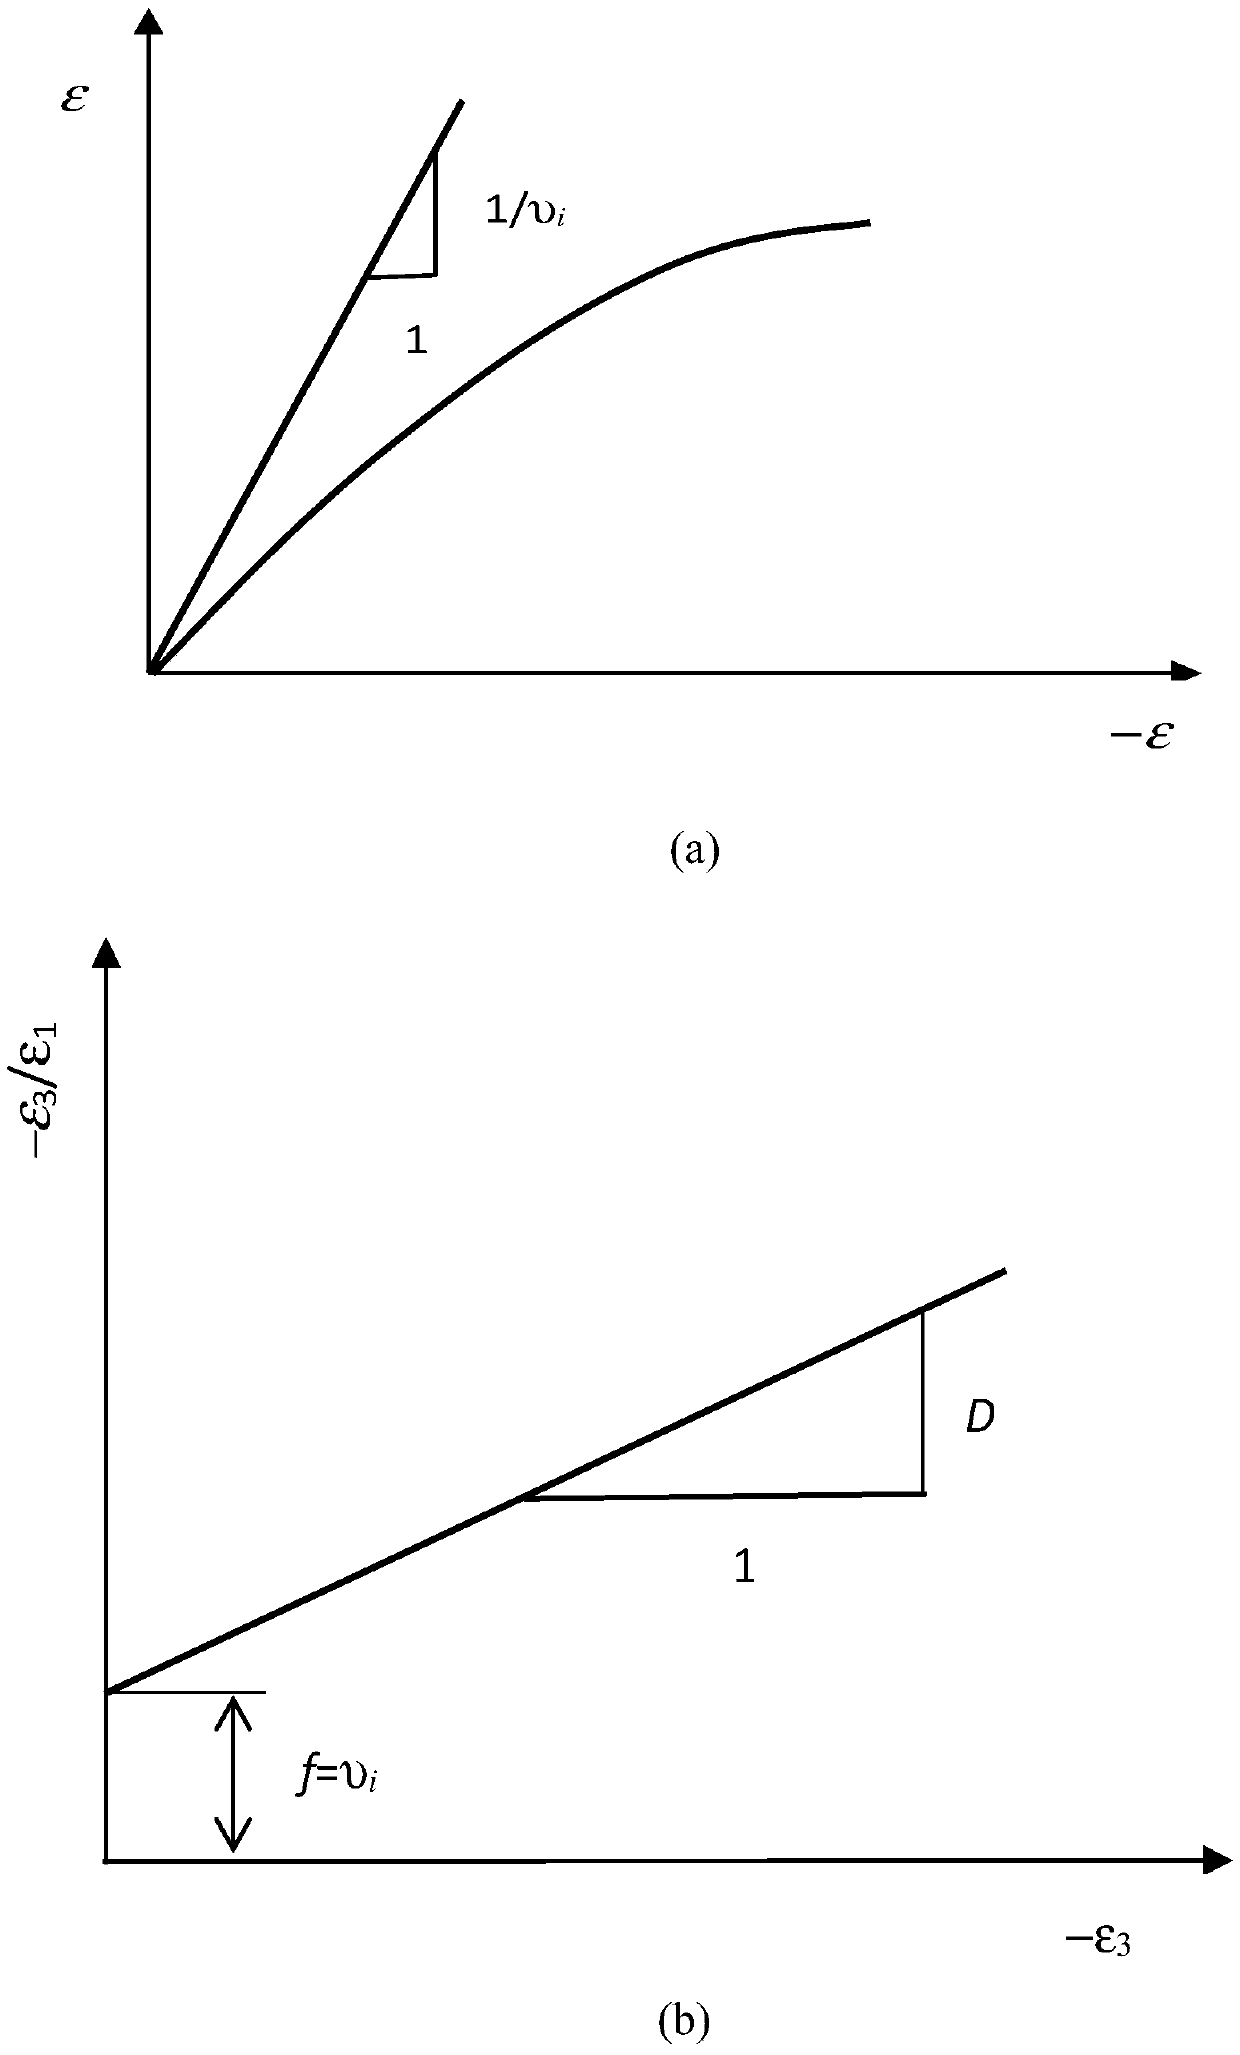 Method for solving parameters in Duncan-Chang hyperbolic model based on Excel